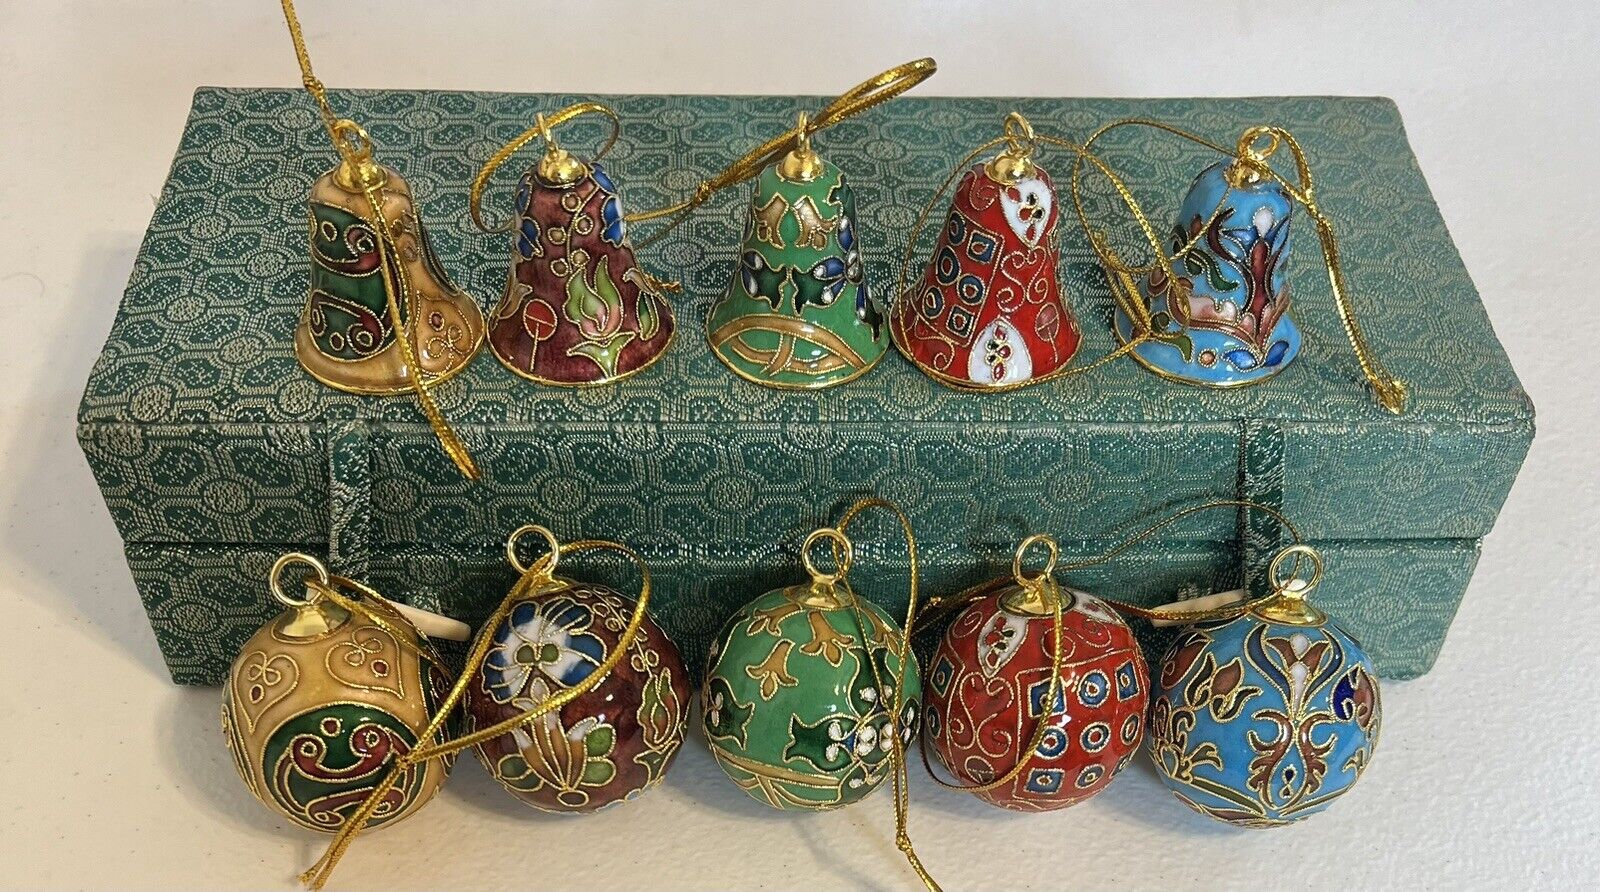 Oriental Treasures Cloisonne Ornaments set of 8 by D. S. STARR.